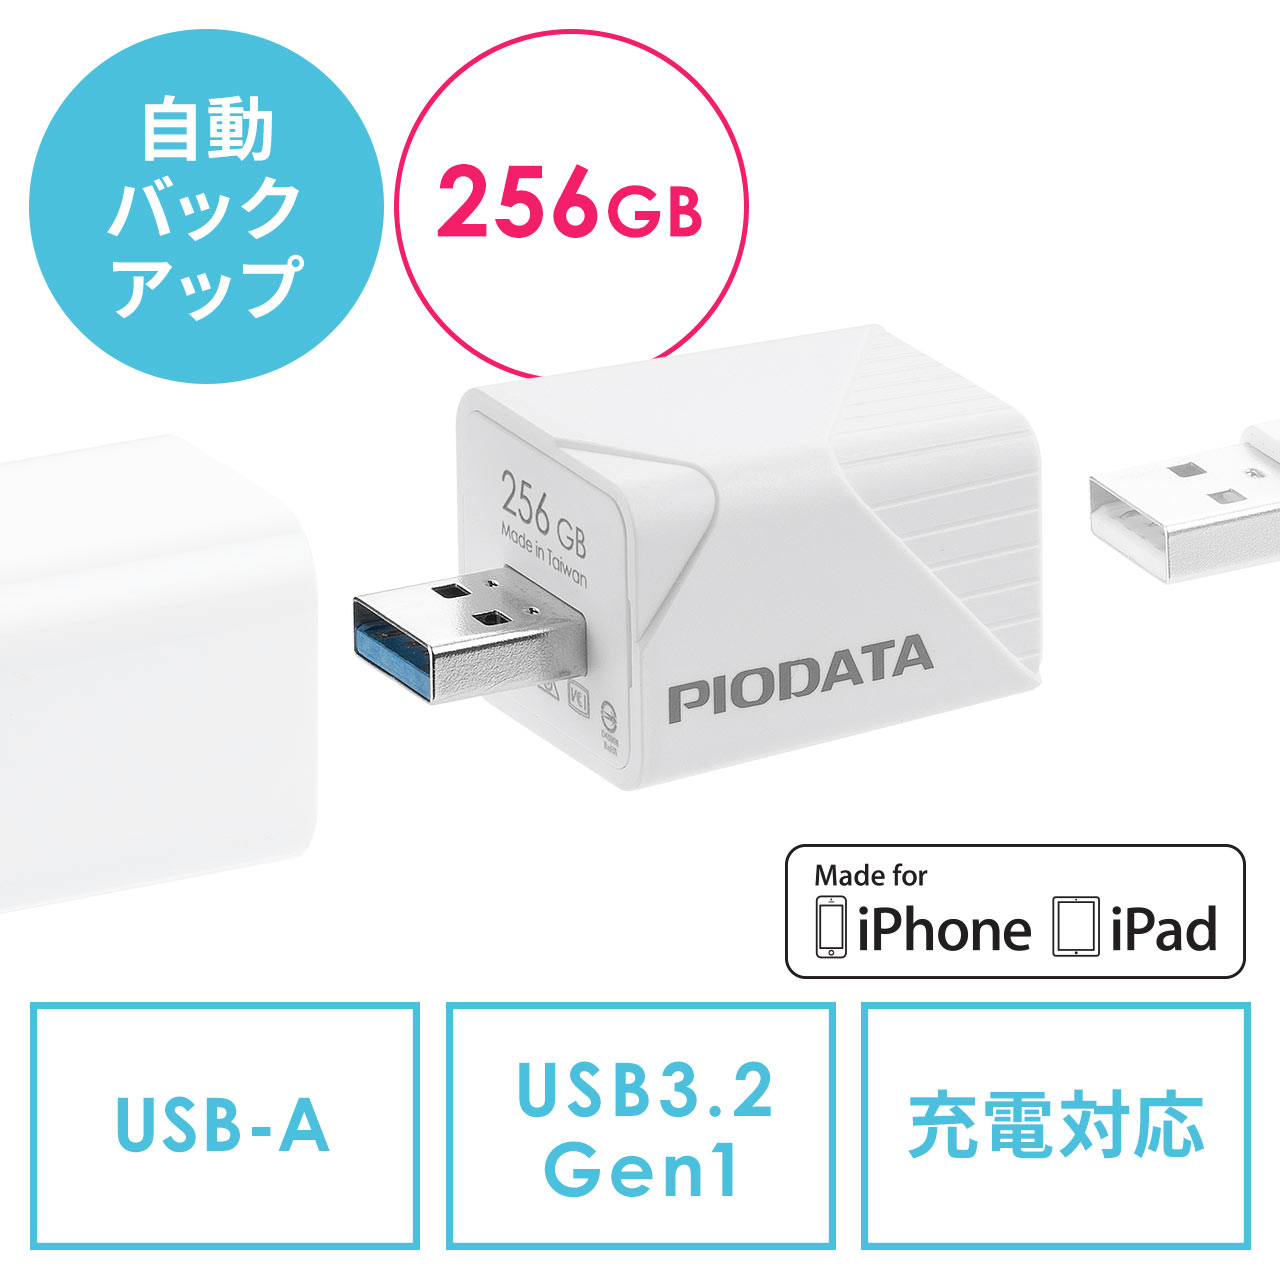 iPhone iPad バックアップ USBメモリ 256GB MFi認証 USB3.2 